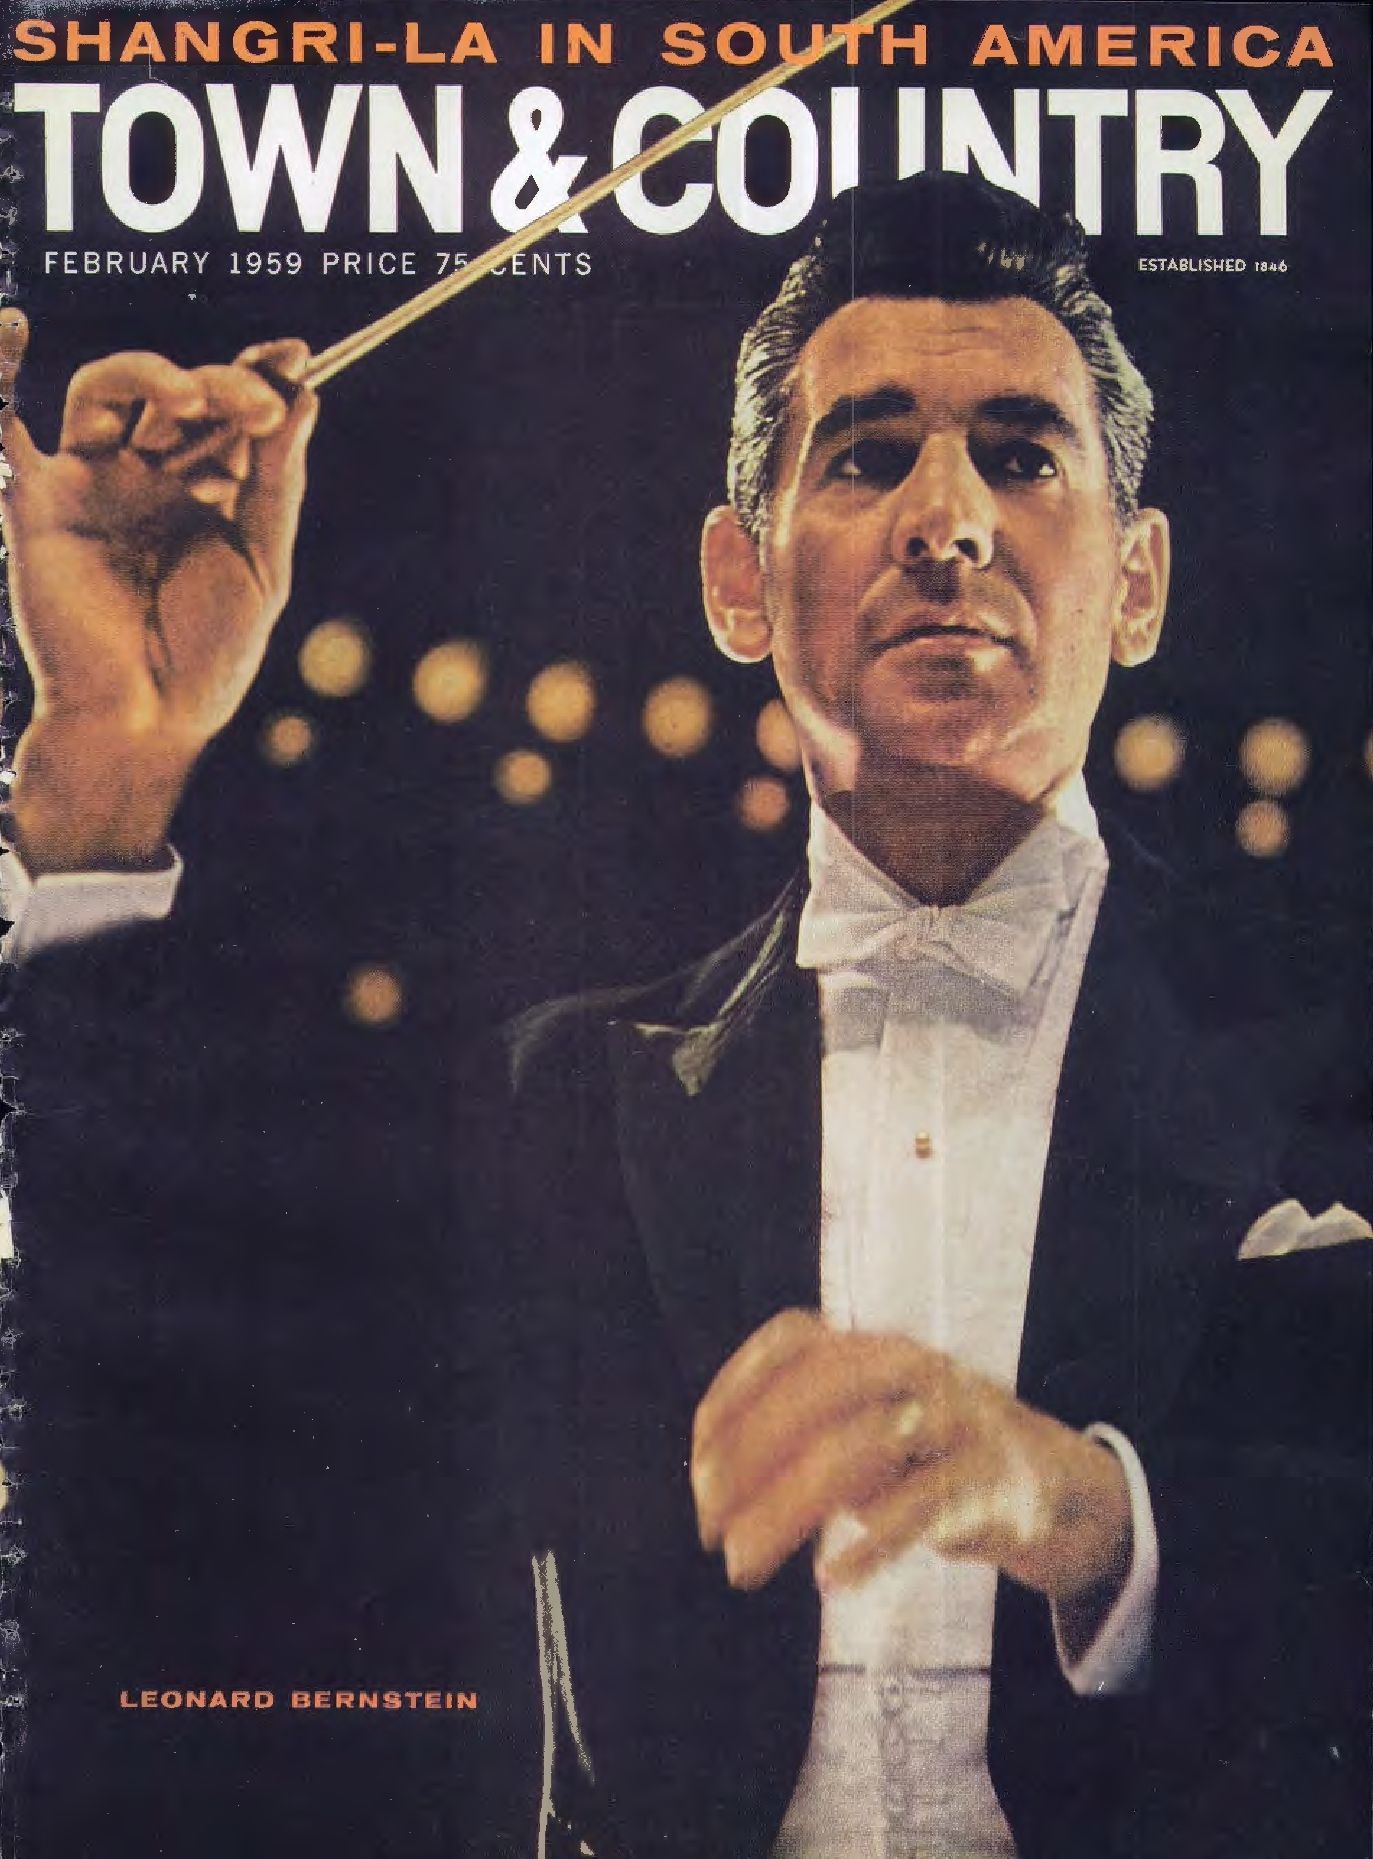 Leonard Bernstein: An American icon - Man & Culture Magazine